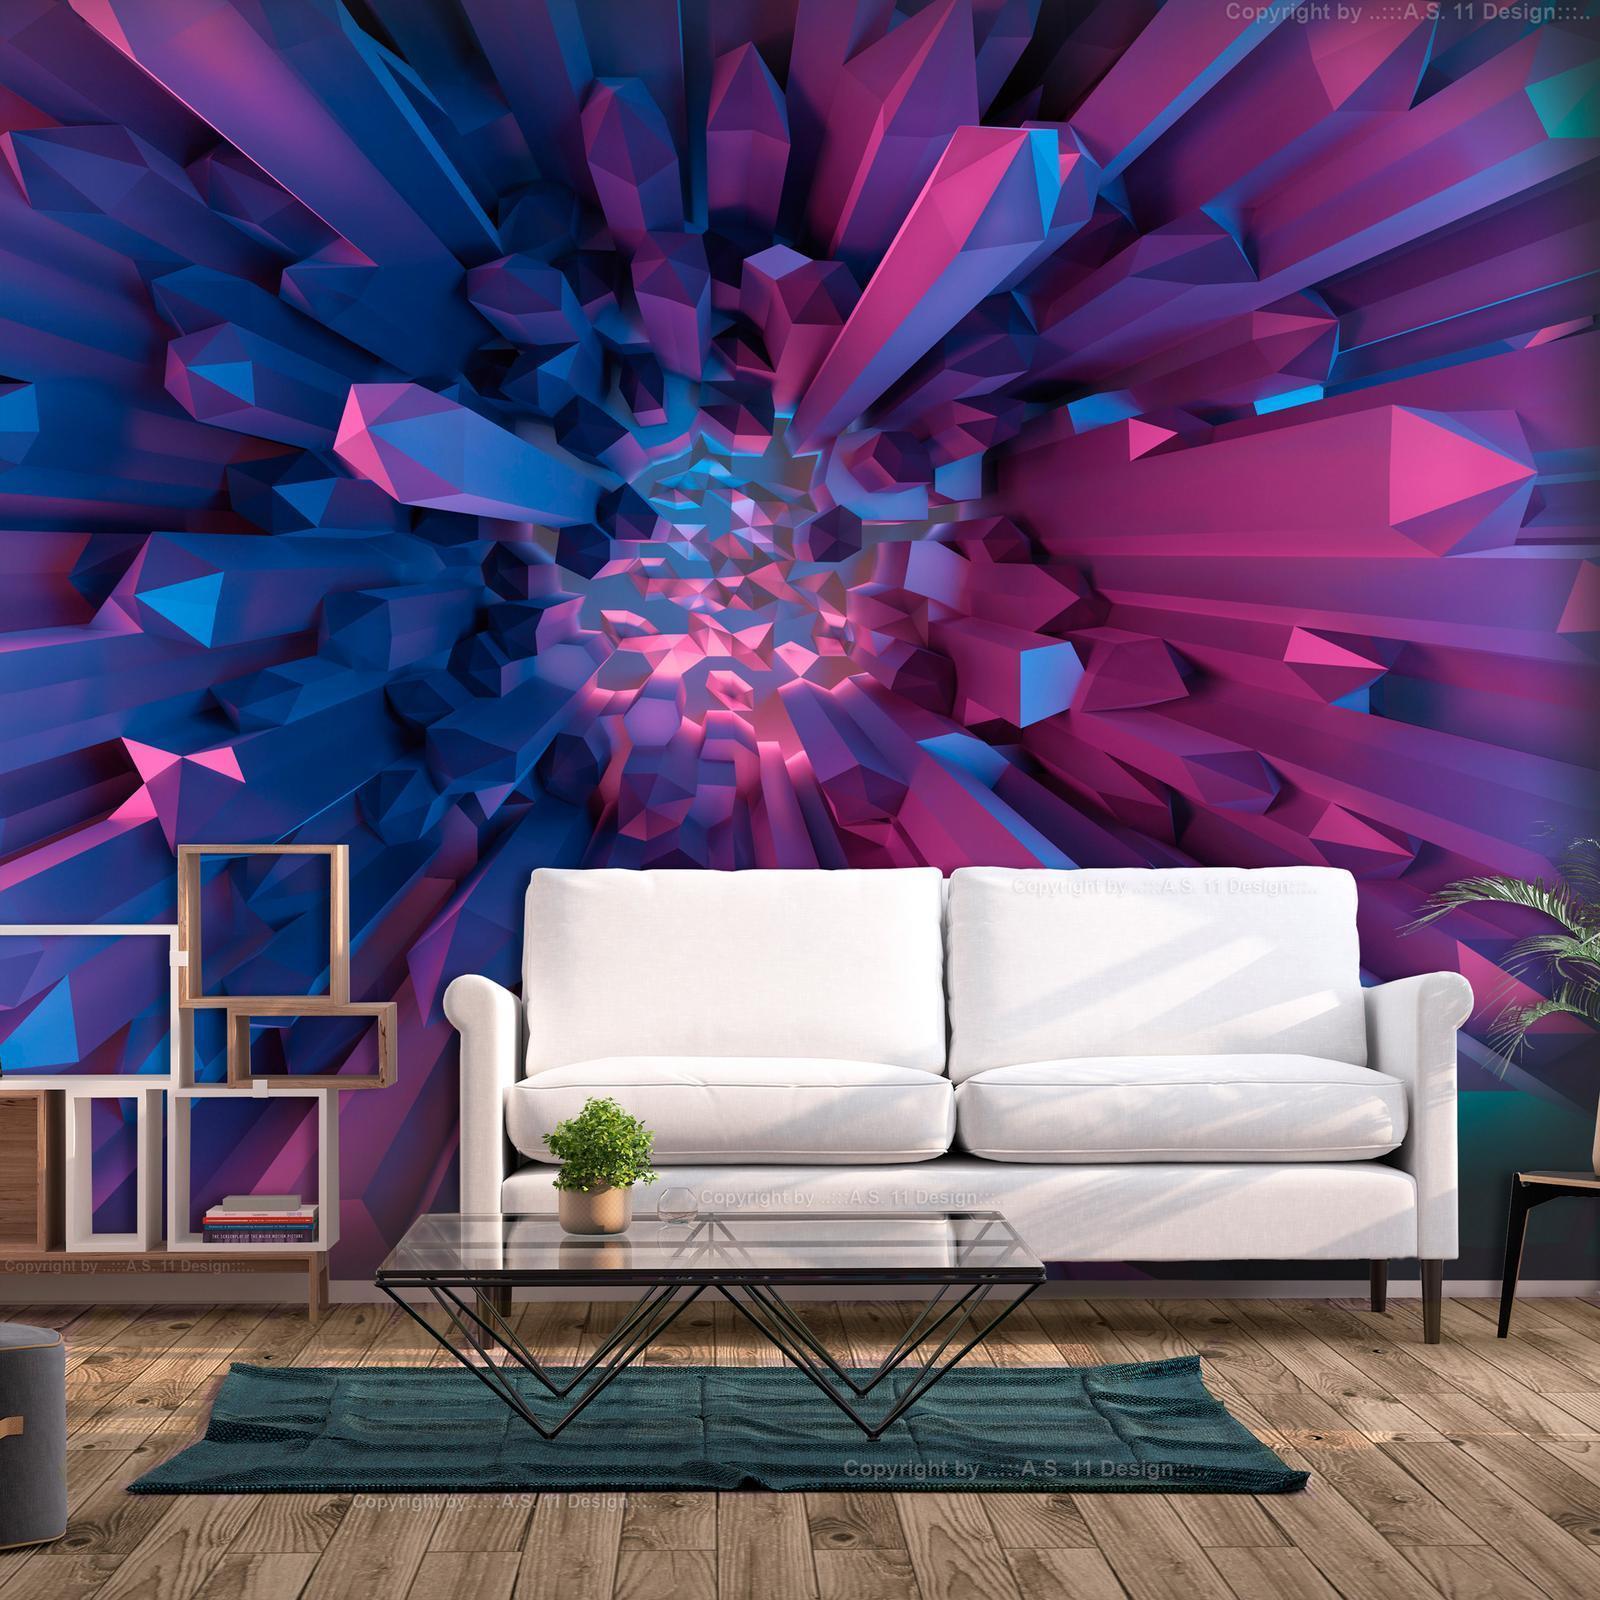 Papier peint - Crystal - geometric fantasy with 3D elements in purple tones